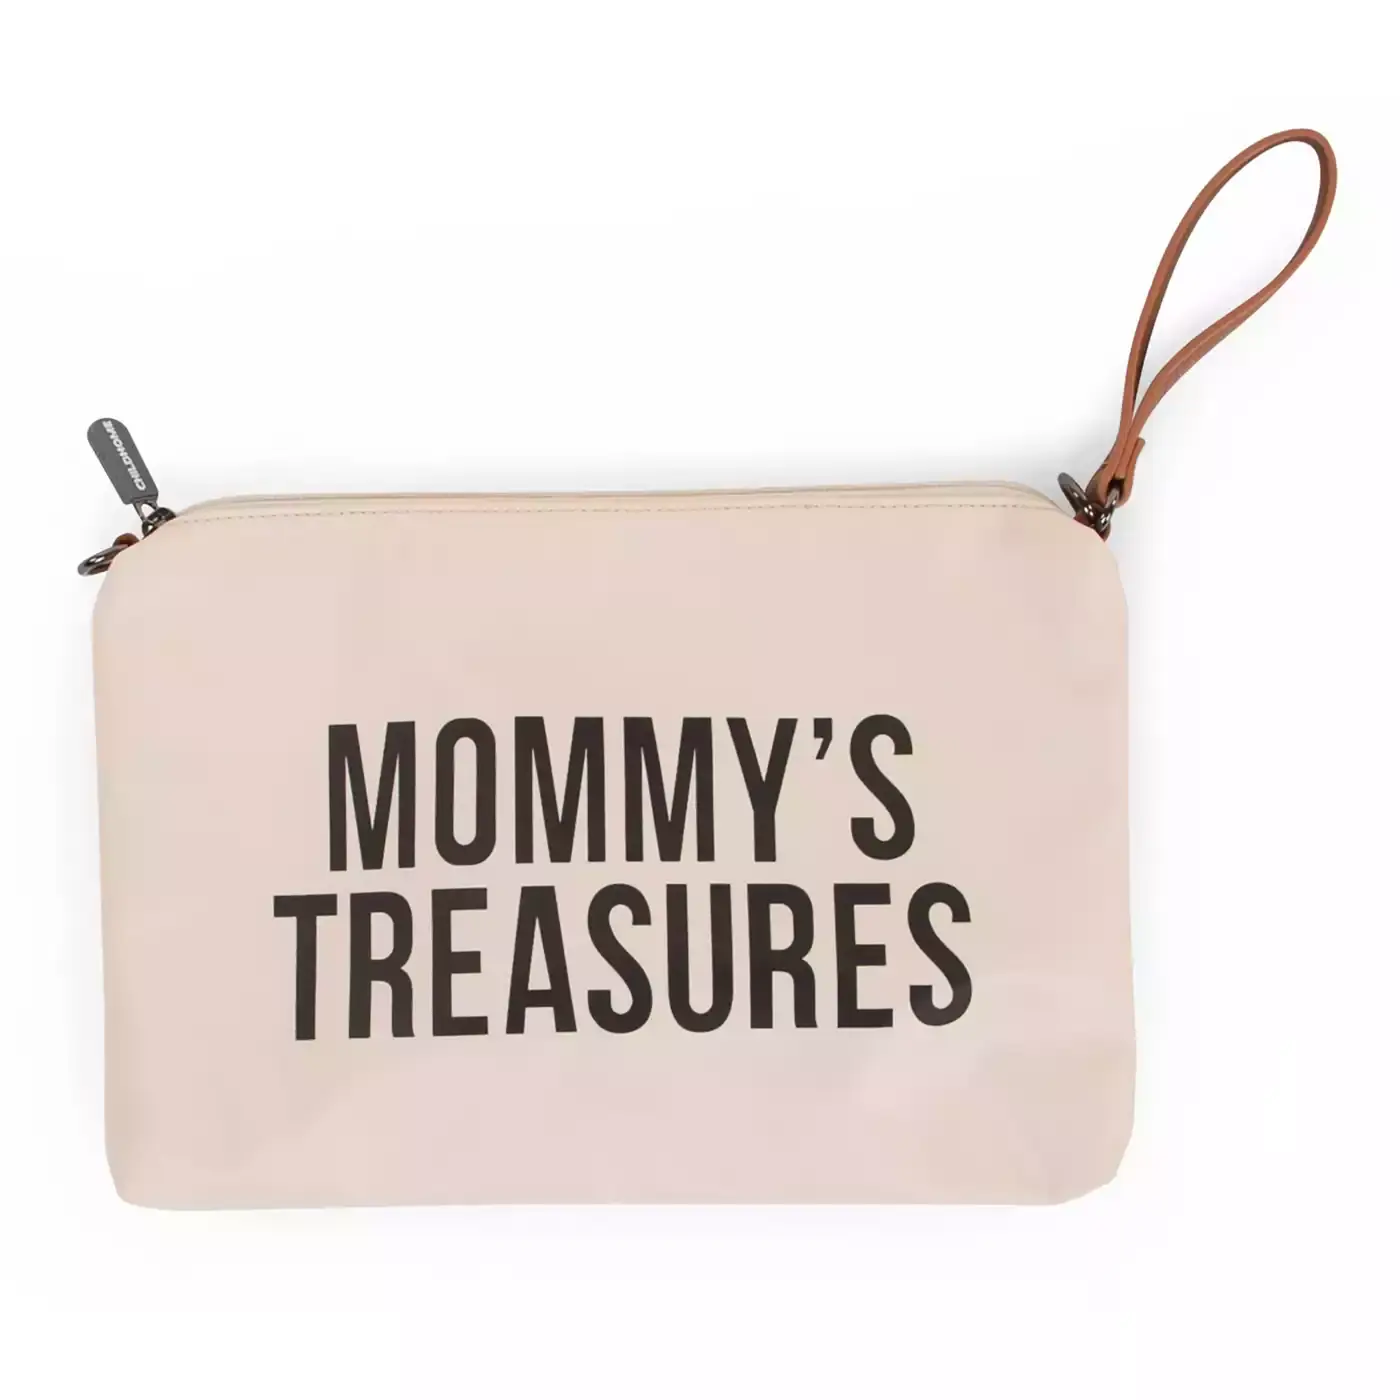 Mommy's Treasures Clutch CHILDHOME Schwarz 2000580656183 1